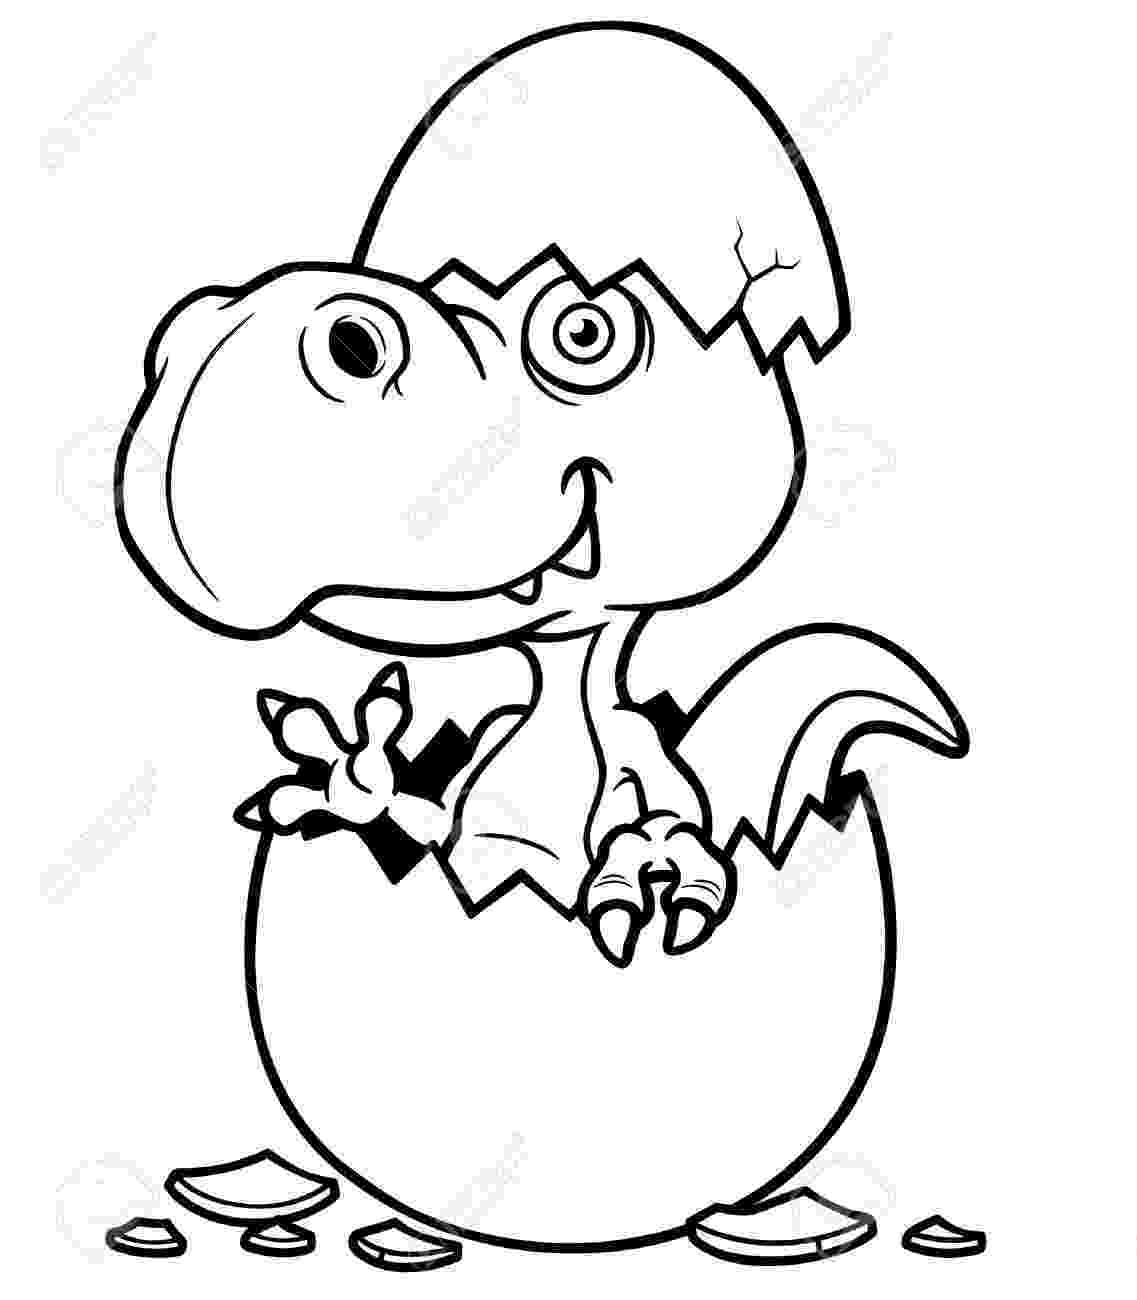 dinosaur egg coloring page dinosaur egg coloring page free download on clipartmag coloring page egg dinosaur 